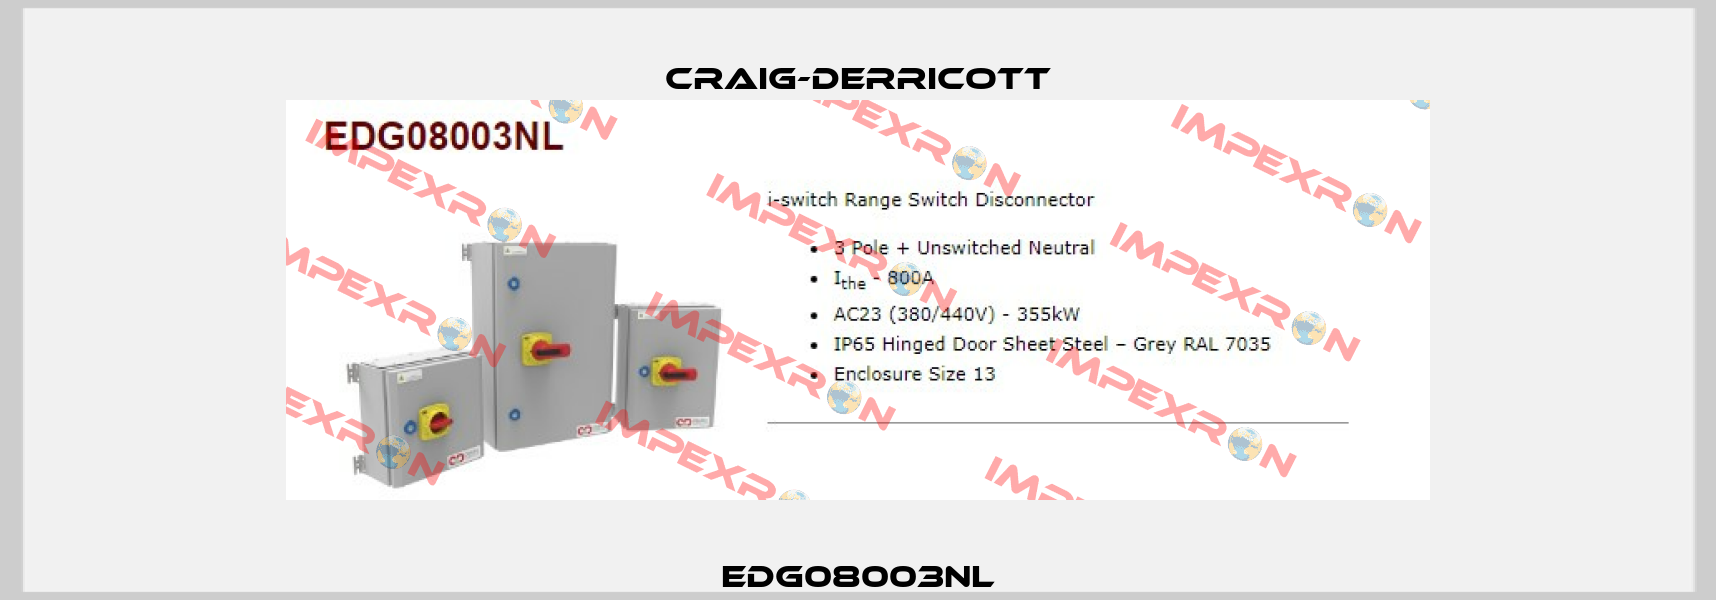 EDG08003NL Craig-Derricott